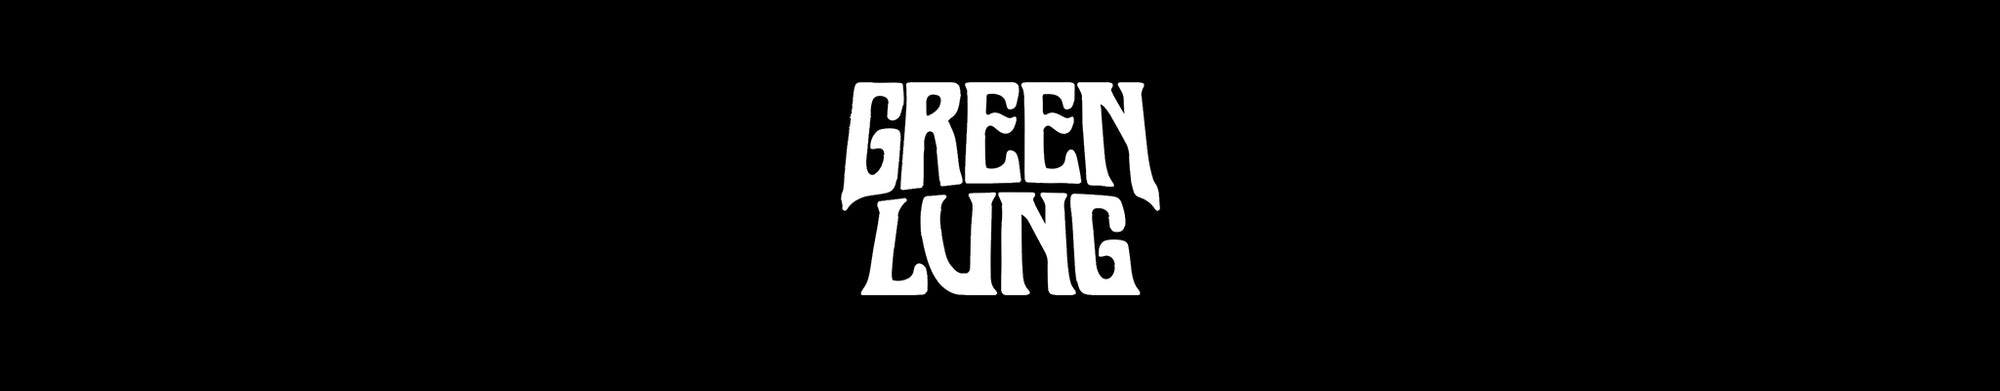 GREEN LUNG